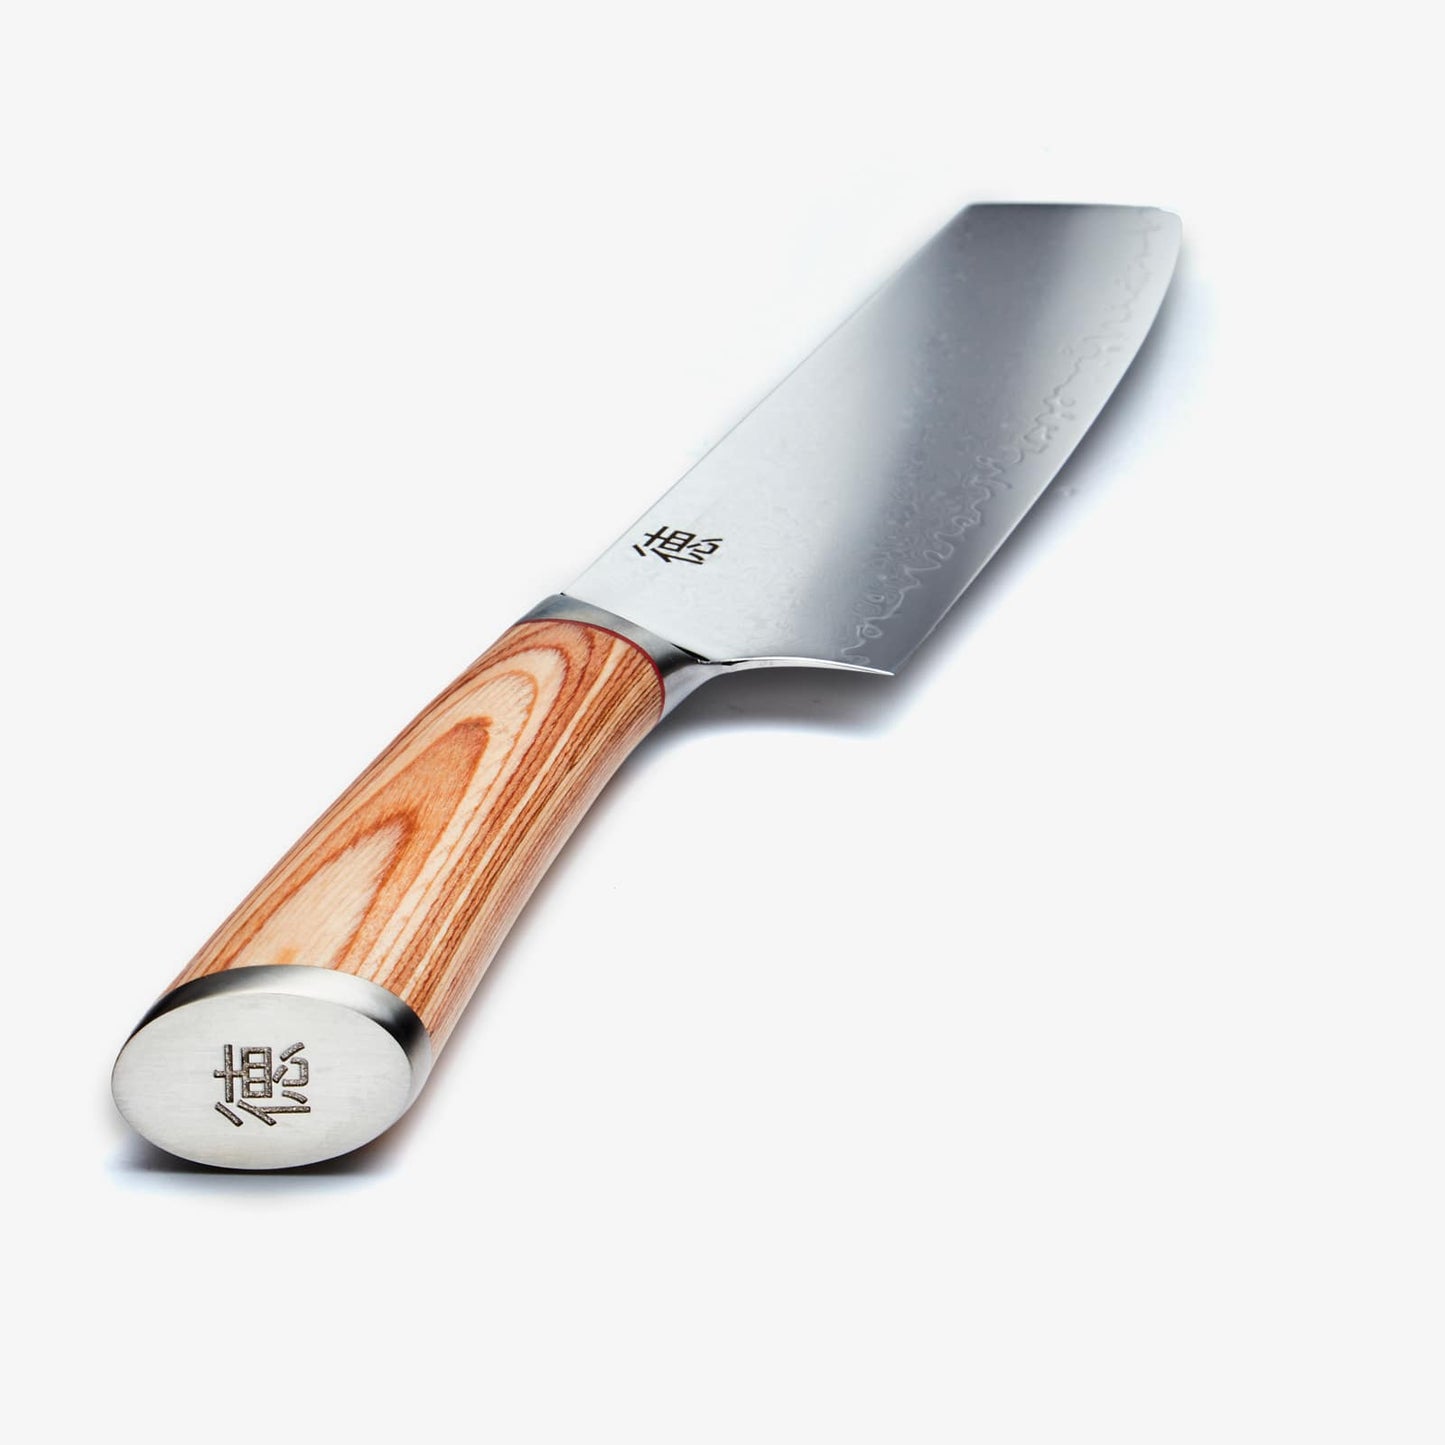 Харута (はる た) 8 -дюймовый нож Кирицук